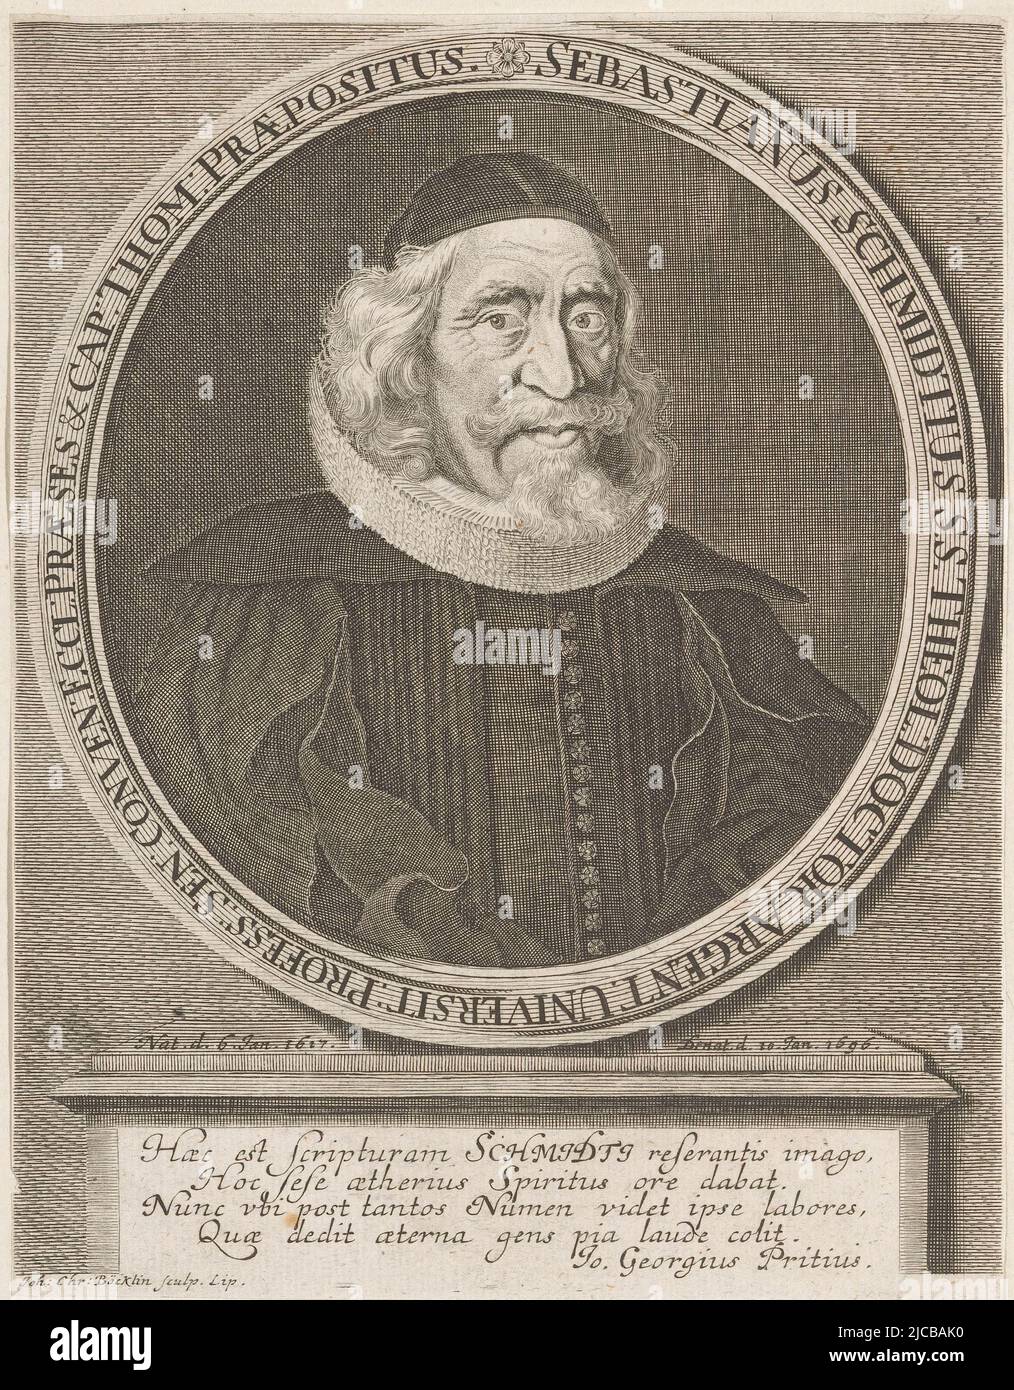 Portrait of Sebastian Schmidt, print maker: Johann Christoph Boecklin, (mentioned on object), Johann Georg Pritius, (mentioned on object), Leipzig, 1696 - 1709, paper, engraving, h 188 mm - w 145 mm Stock Photo